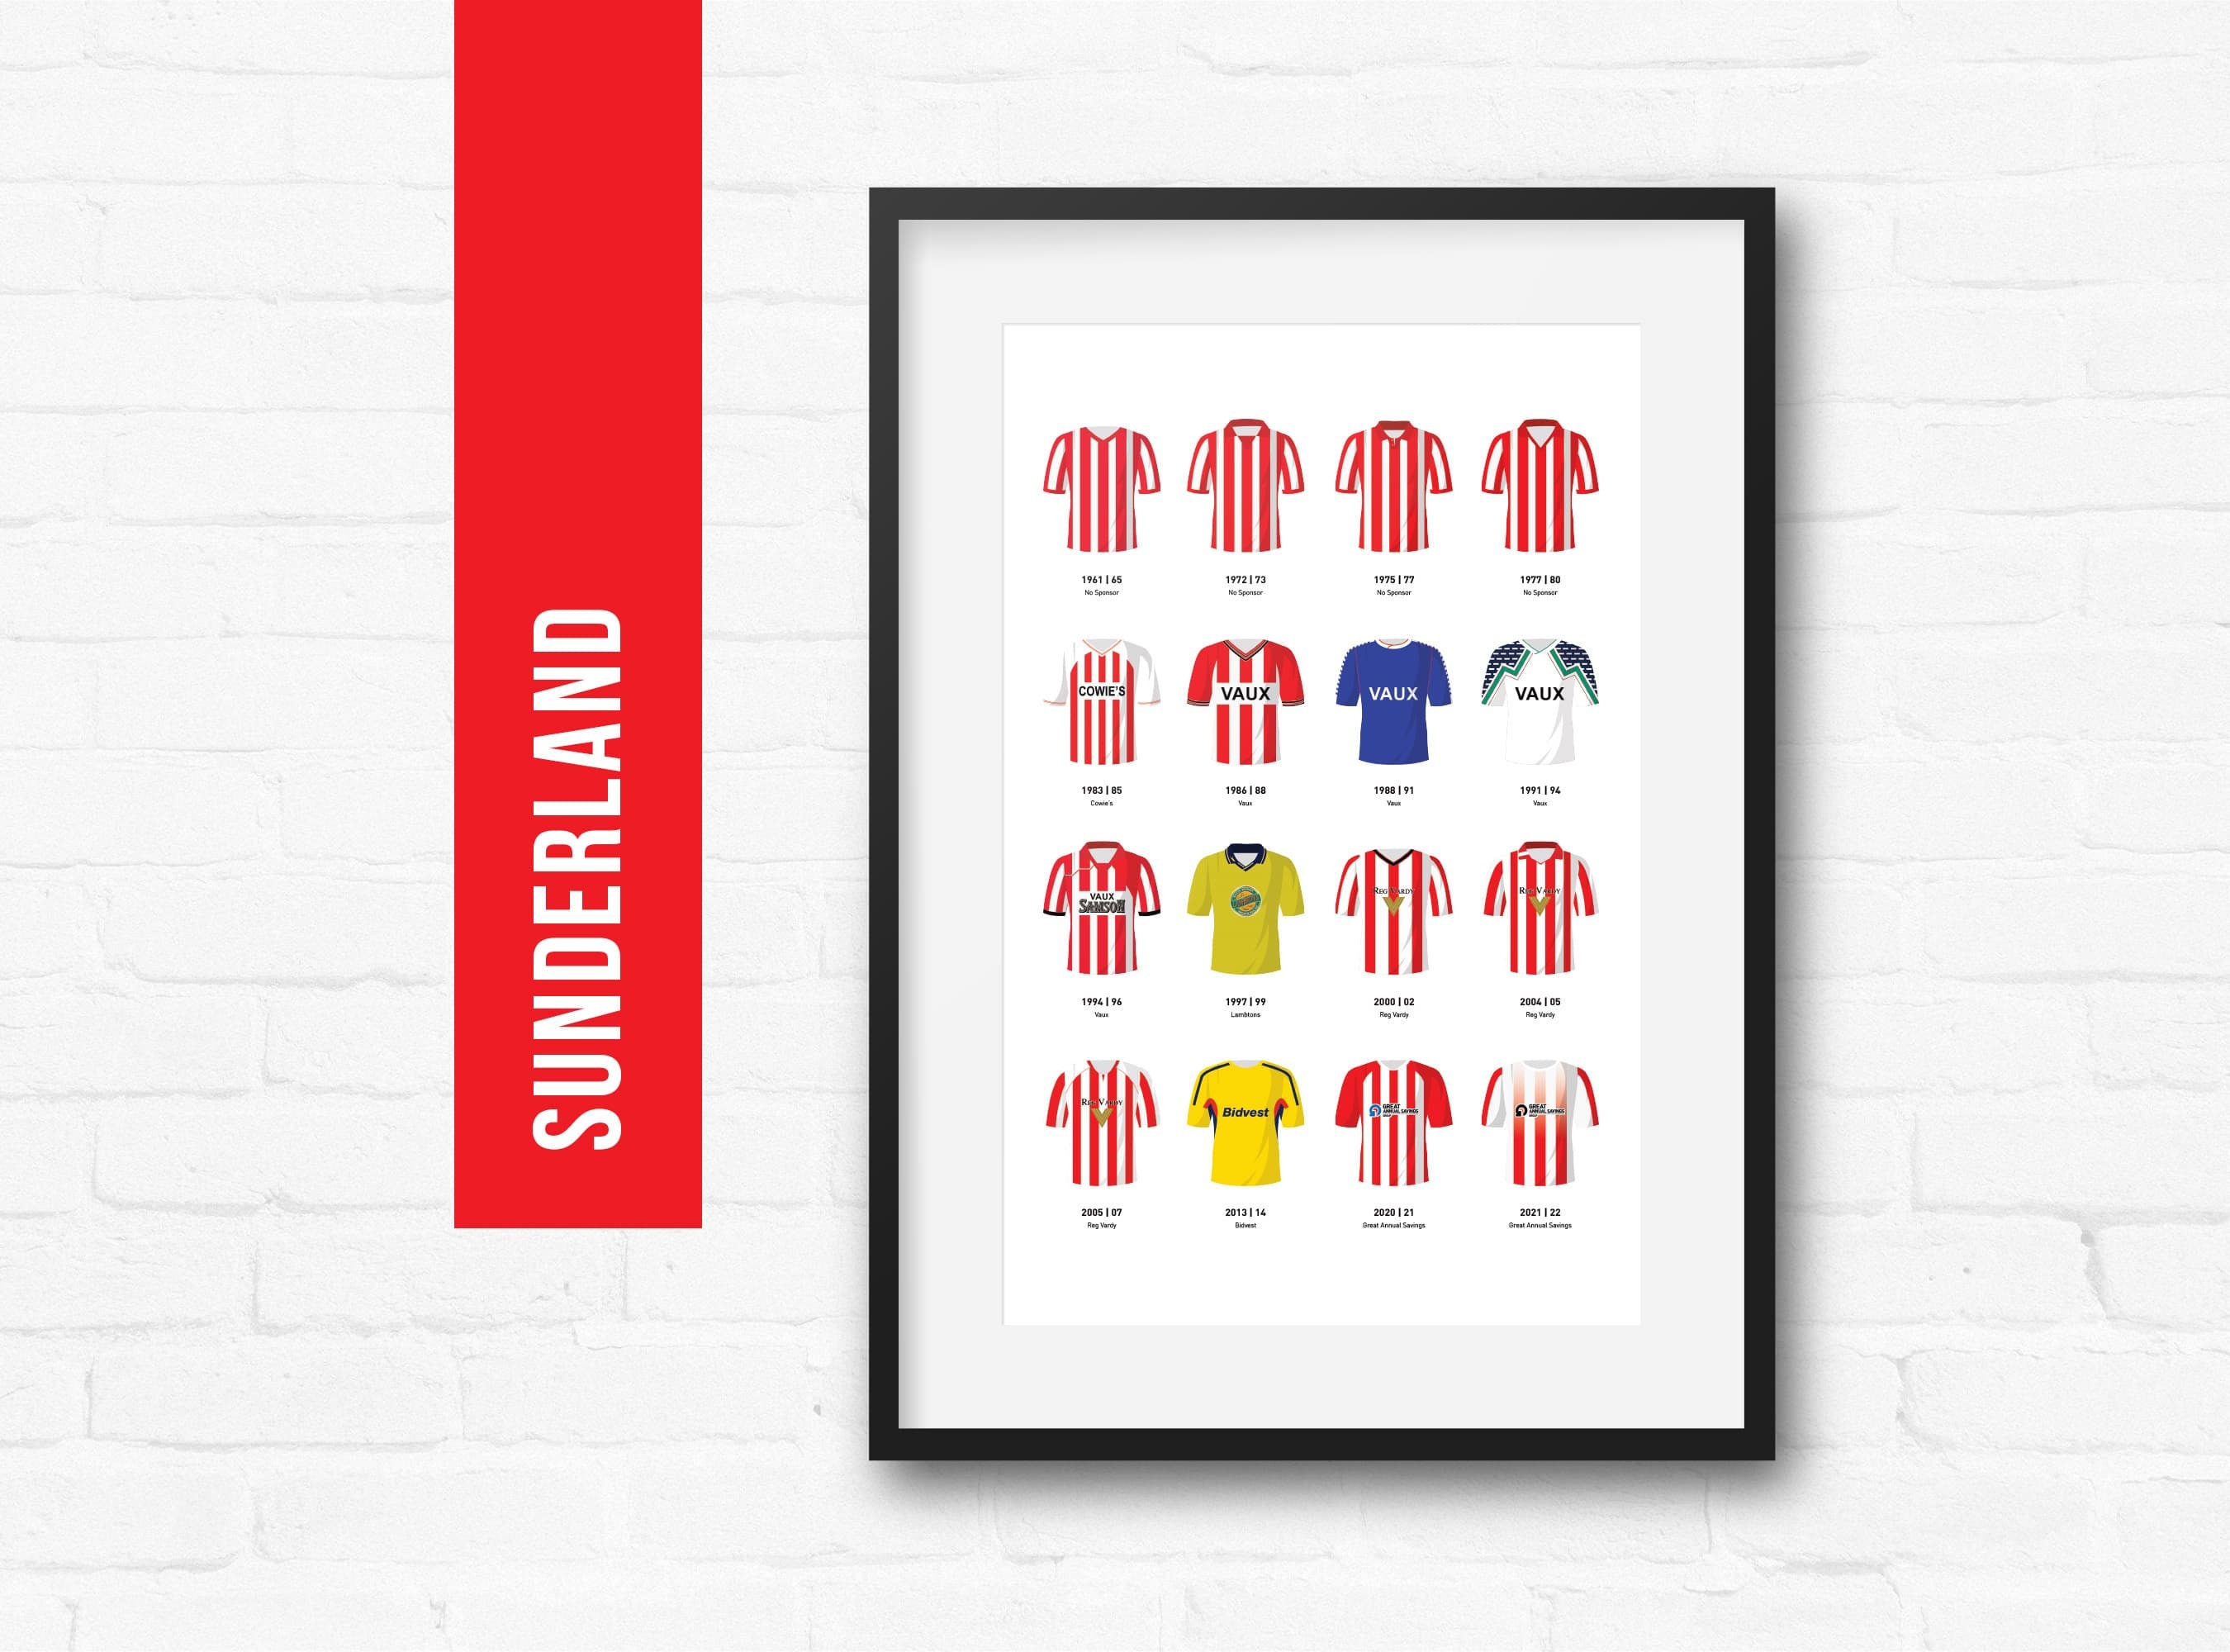 Sunderland Home football shirt 1991 - 1994. Sponsored by Vaux Brewery